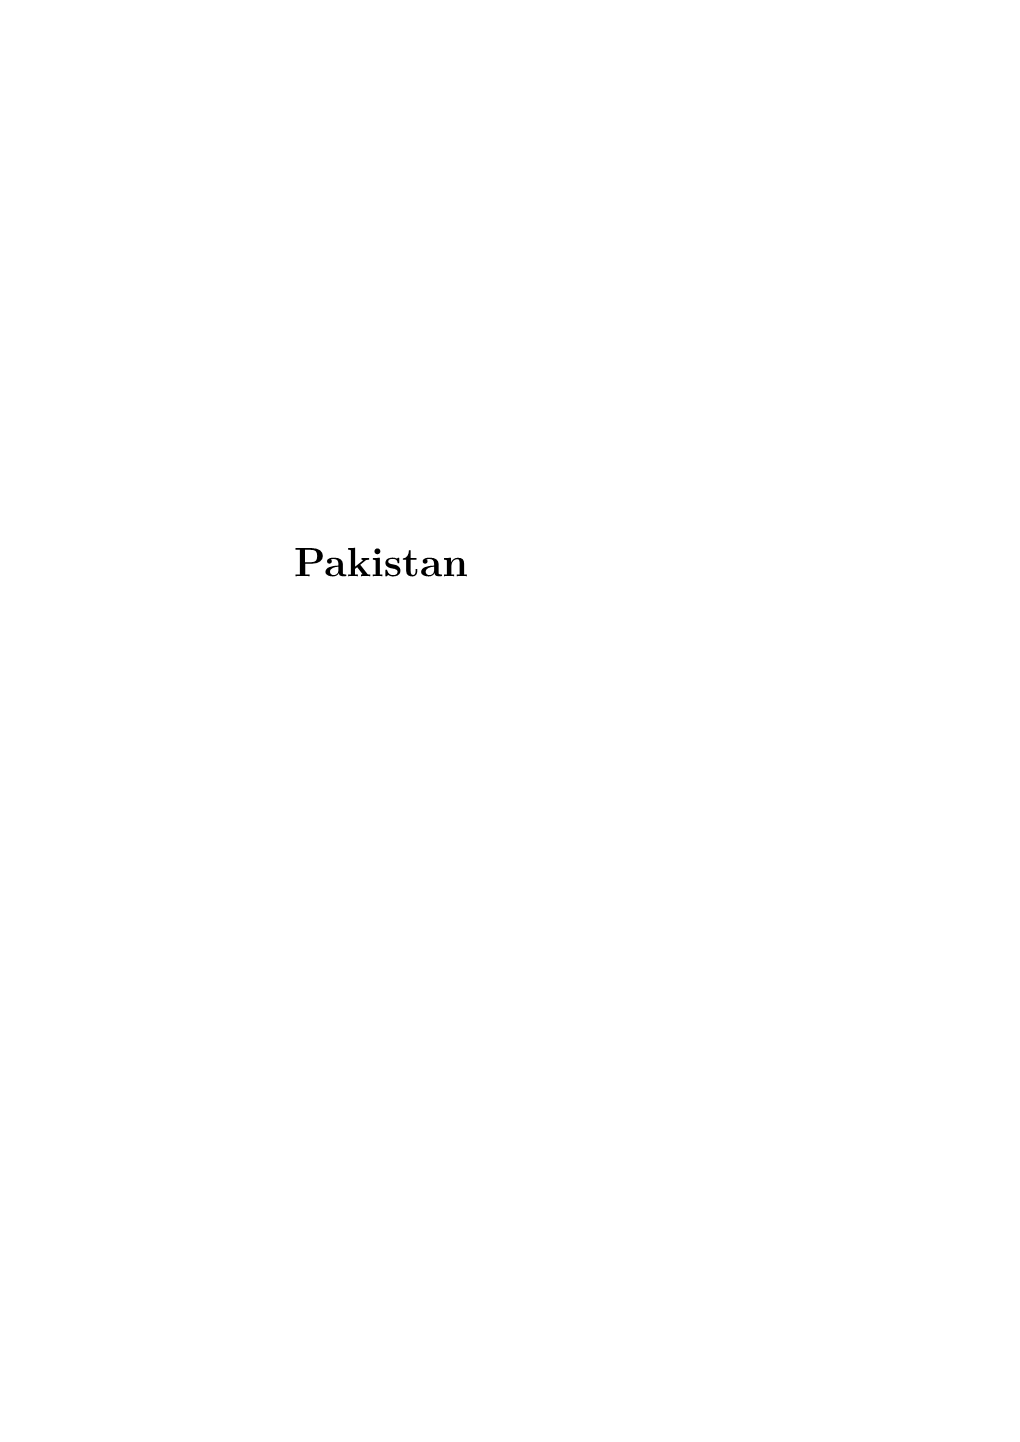 Ethnicity in Pakistan